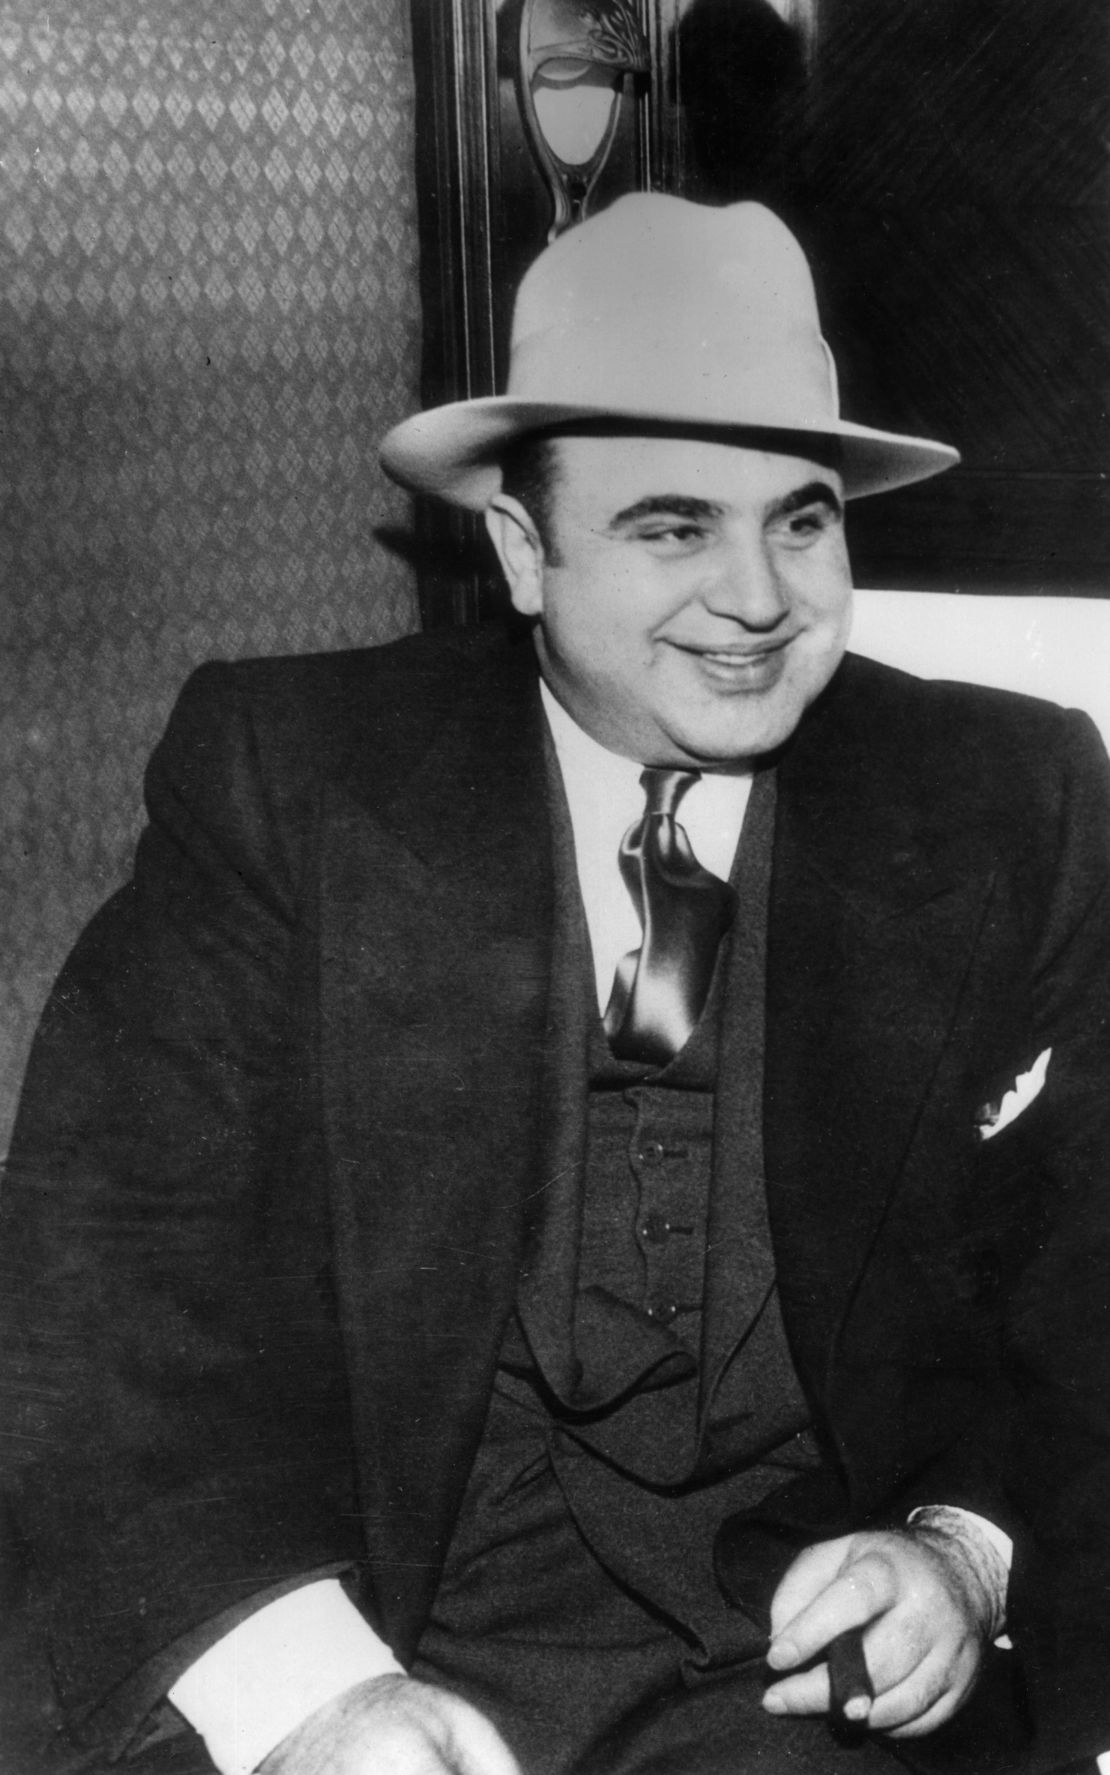 Al Capone dominated organized crime in Chicago during the Prohibition era.